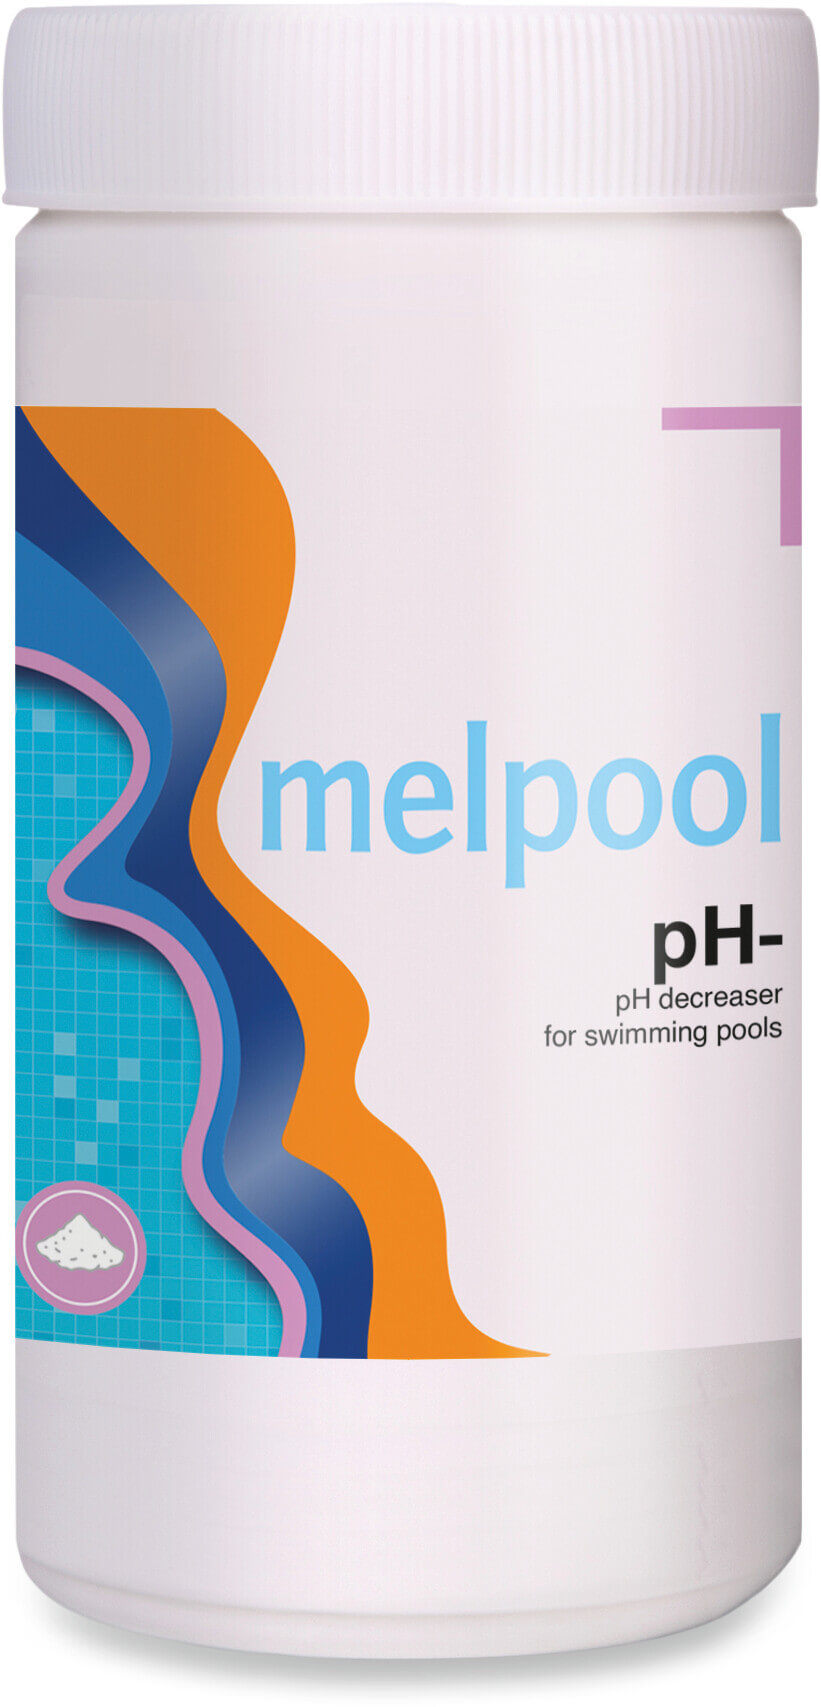 Melpool pH- Sodium bisuphate to decrease pH 1500g